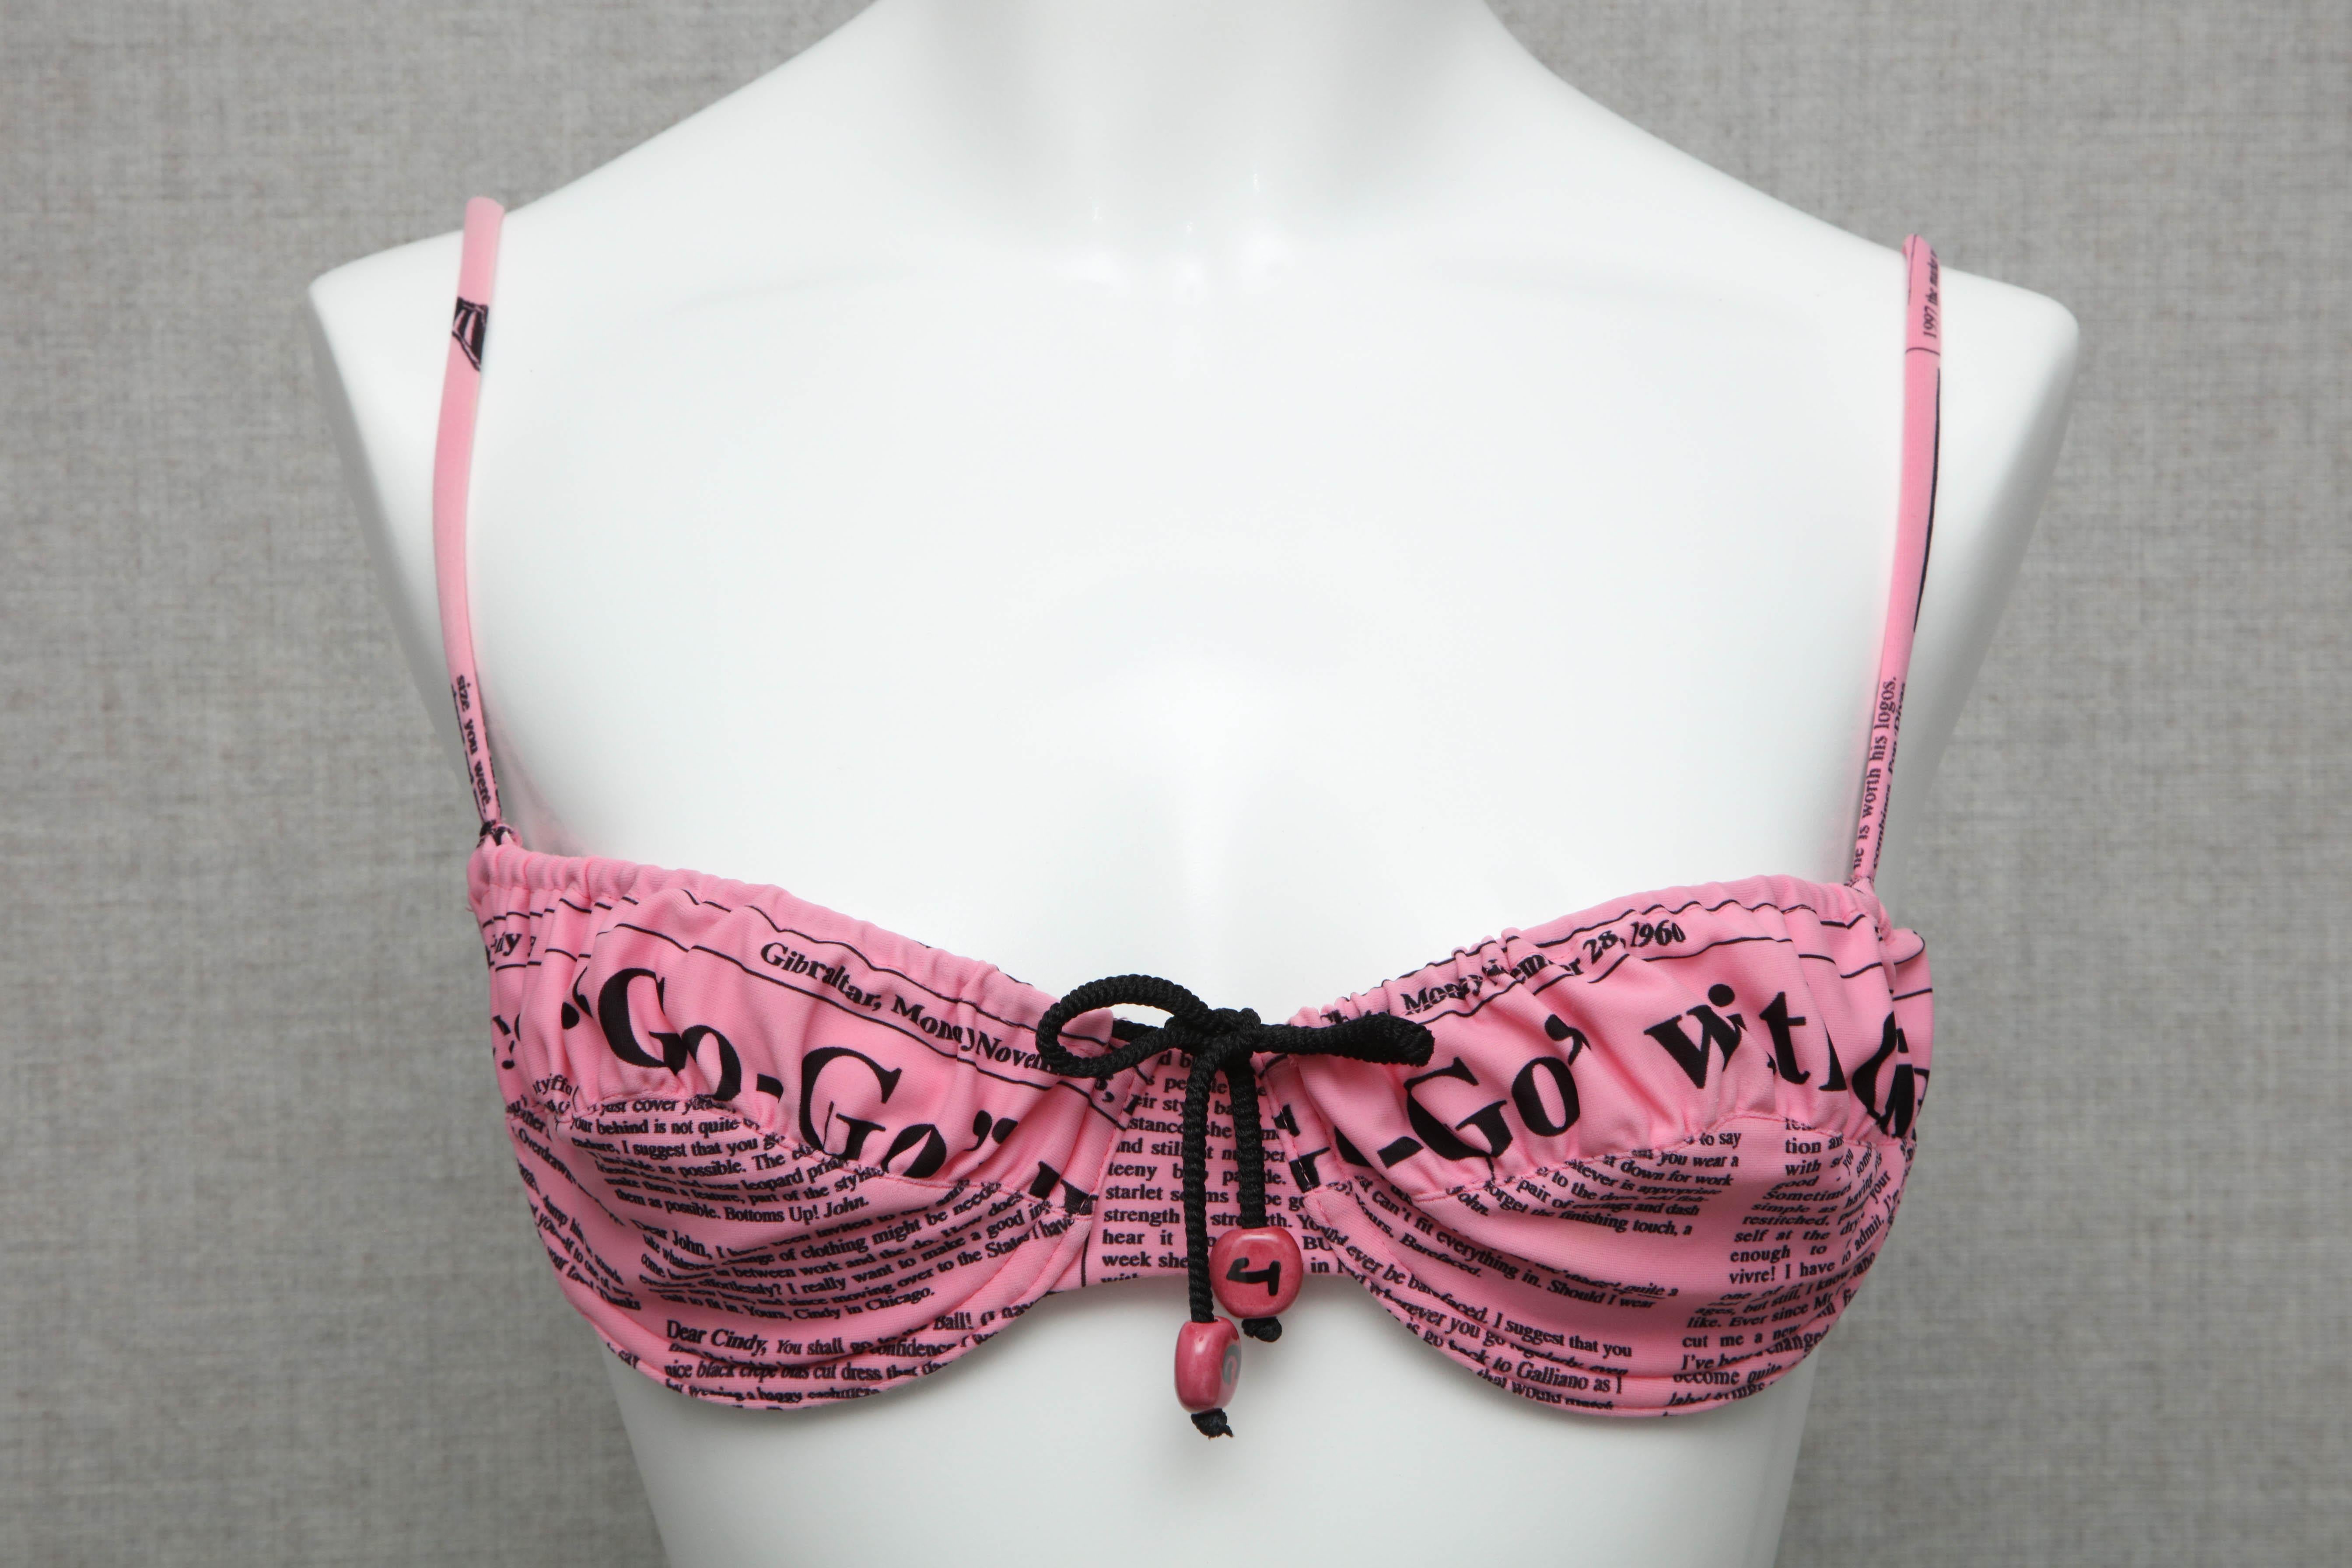 Extremely rare John Galliano iconic pink newspaper print bikini.

